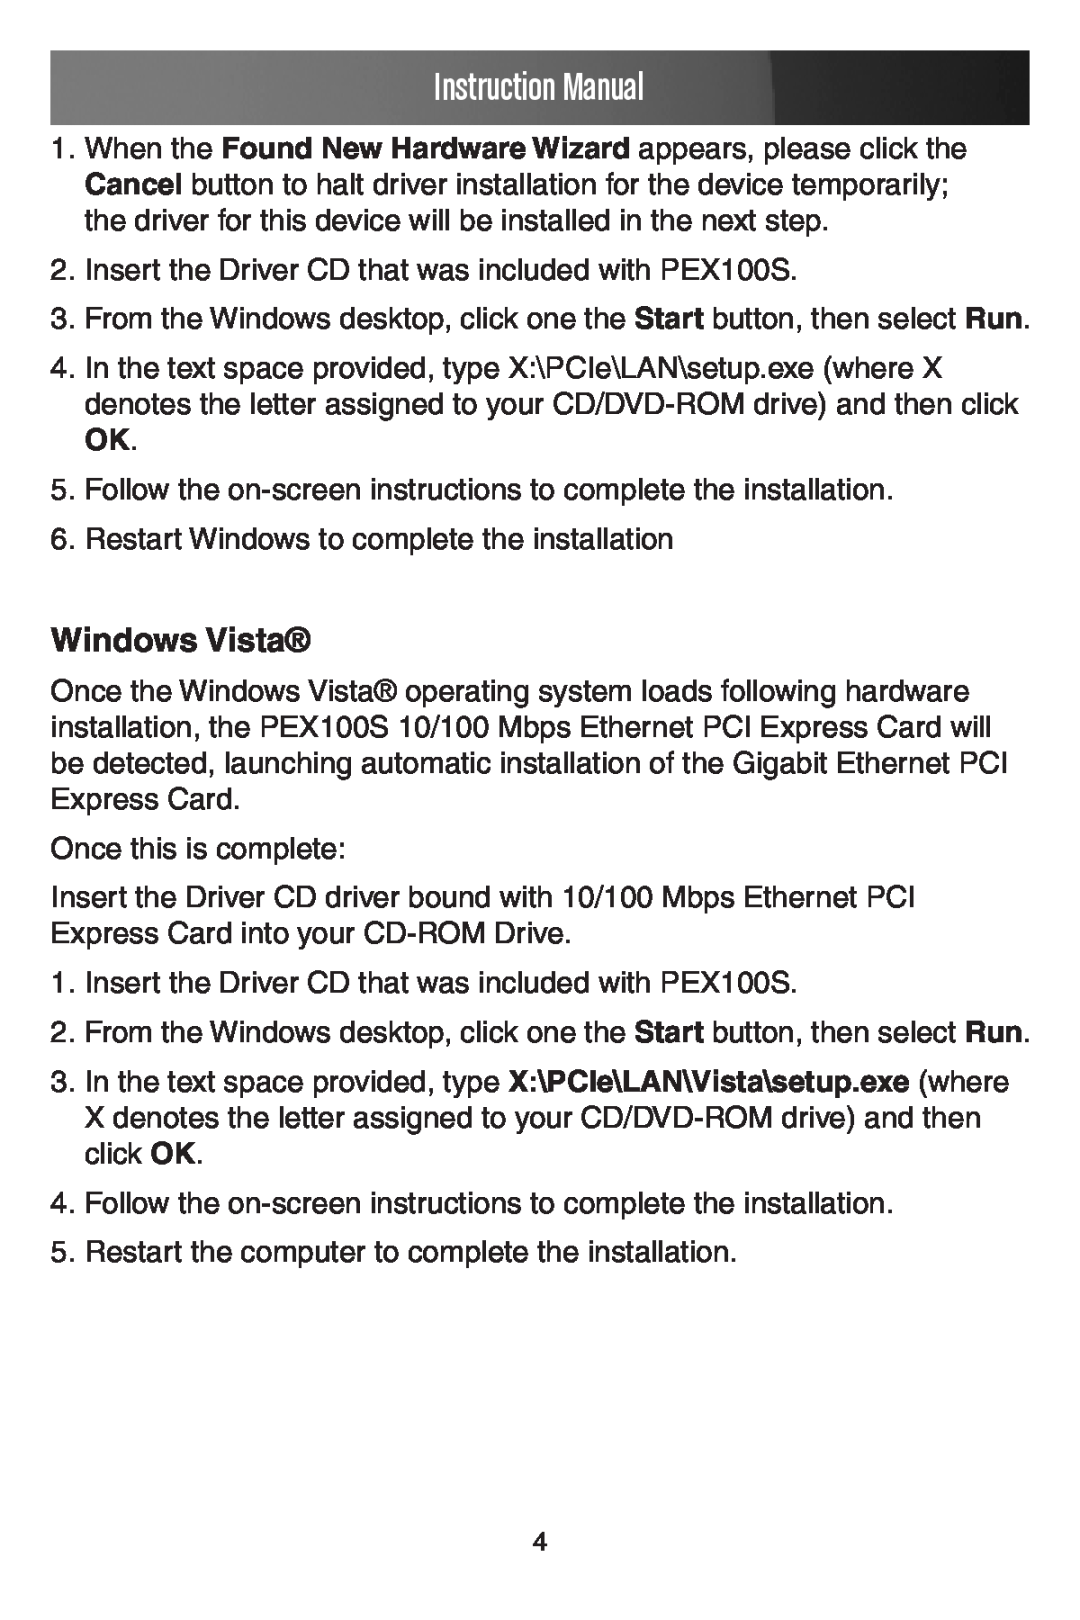 StarTech.com PEX100S manual Windows Vista, Instruction Manual 